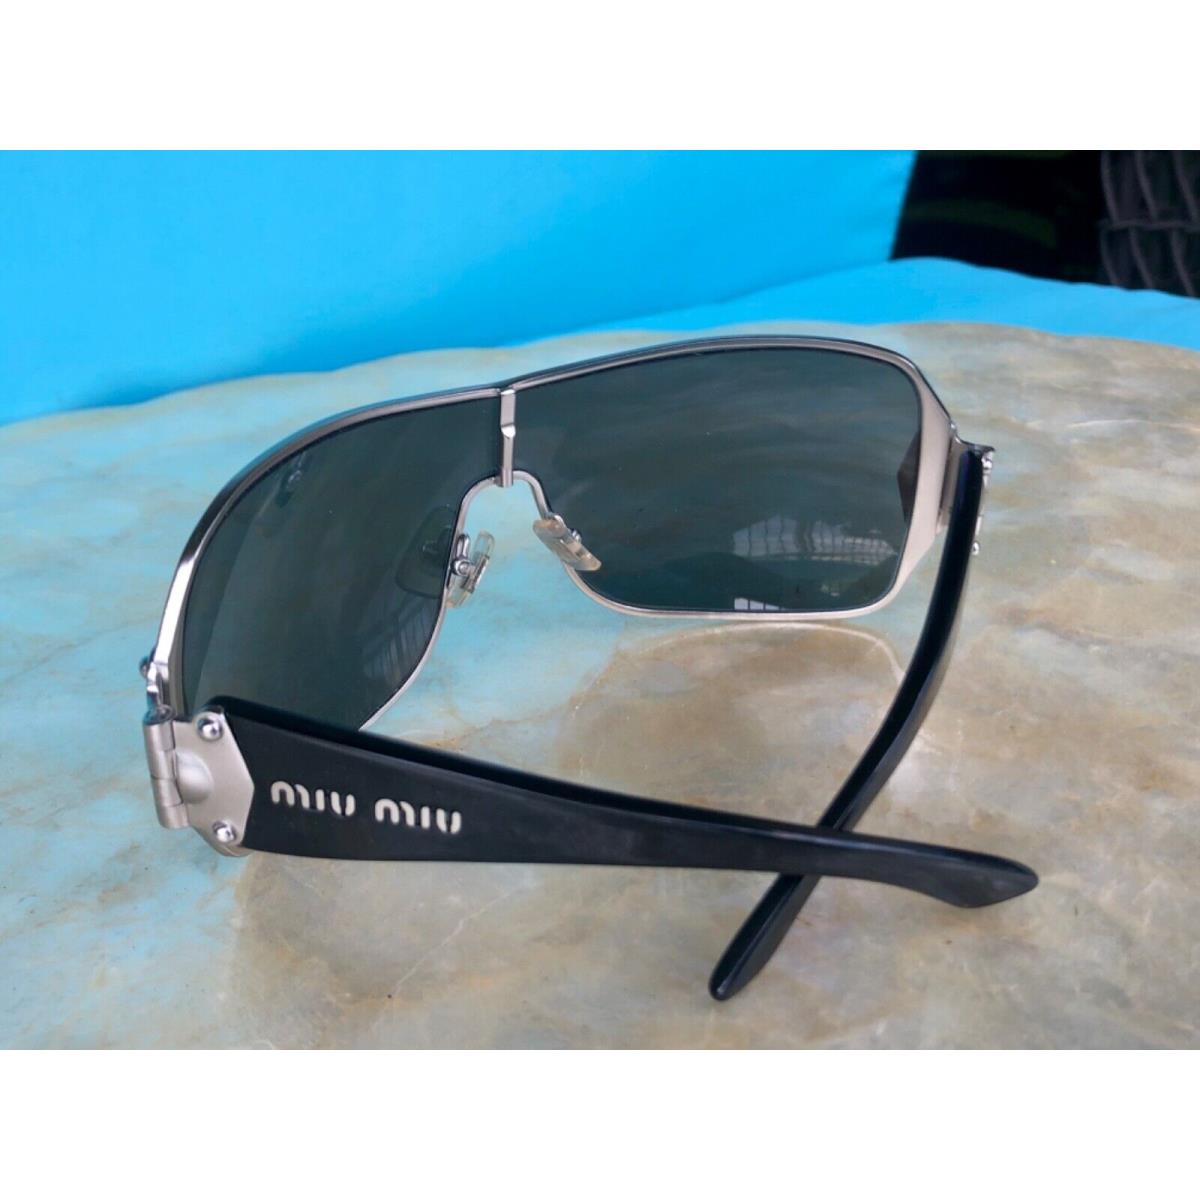 Miu Miu sunglasses  - SILVER with BLACK ARMS Frame 8